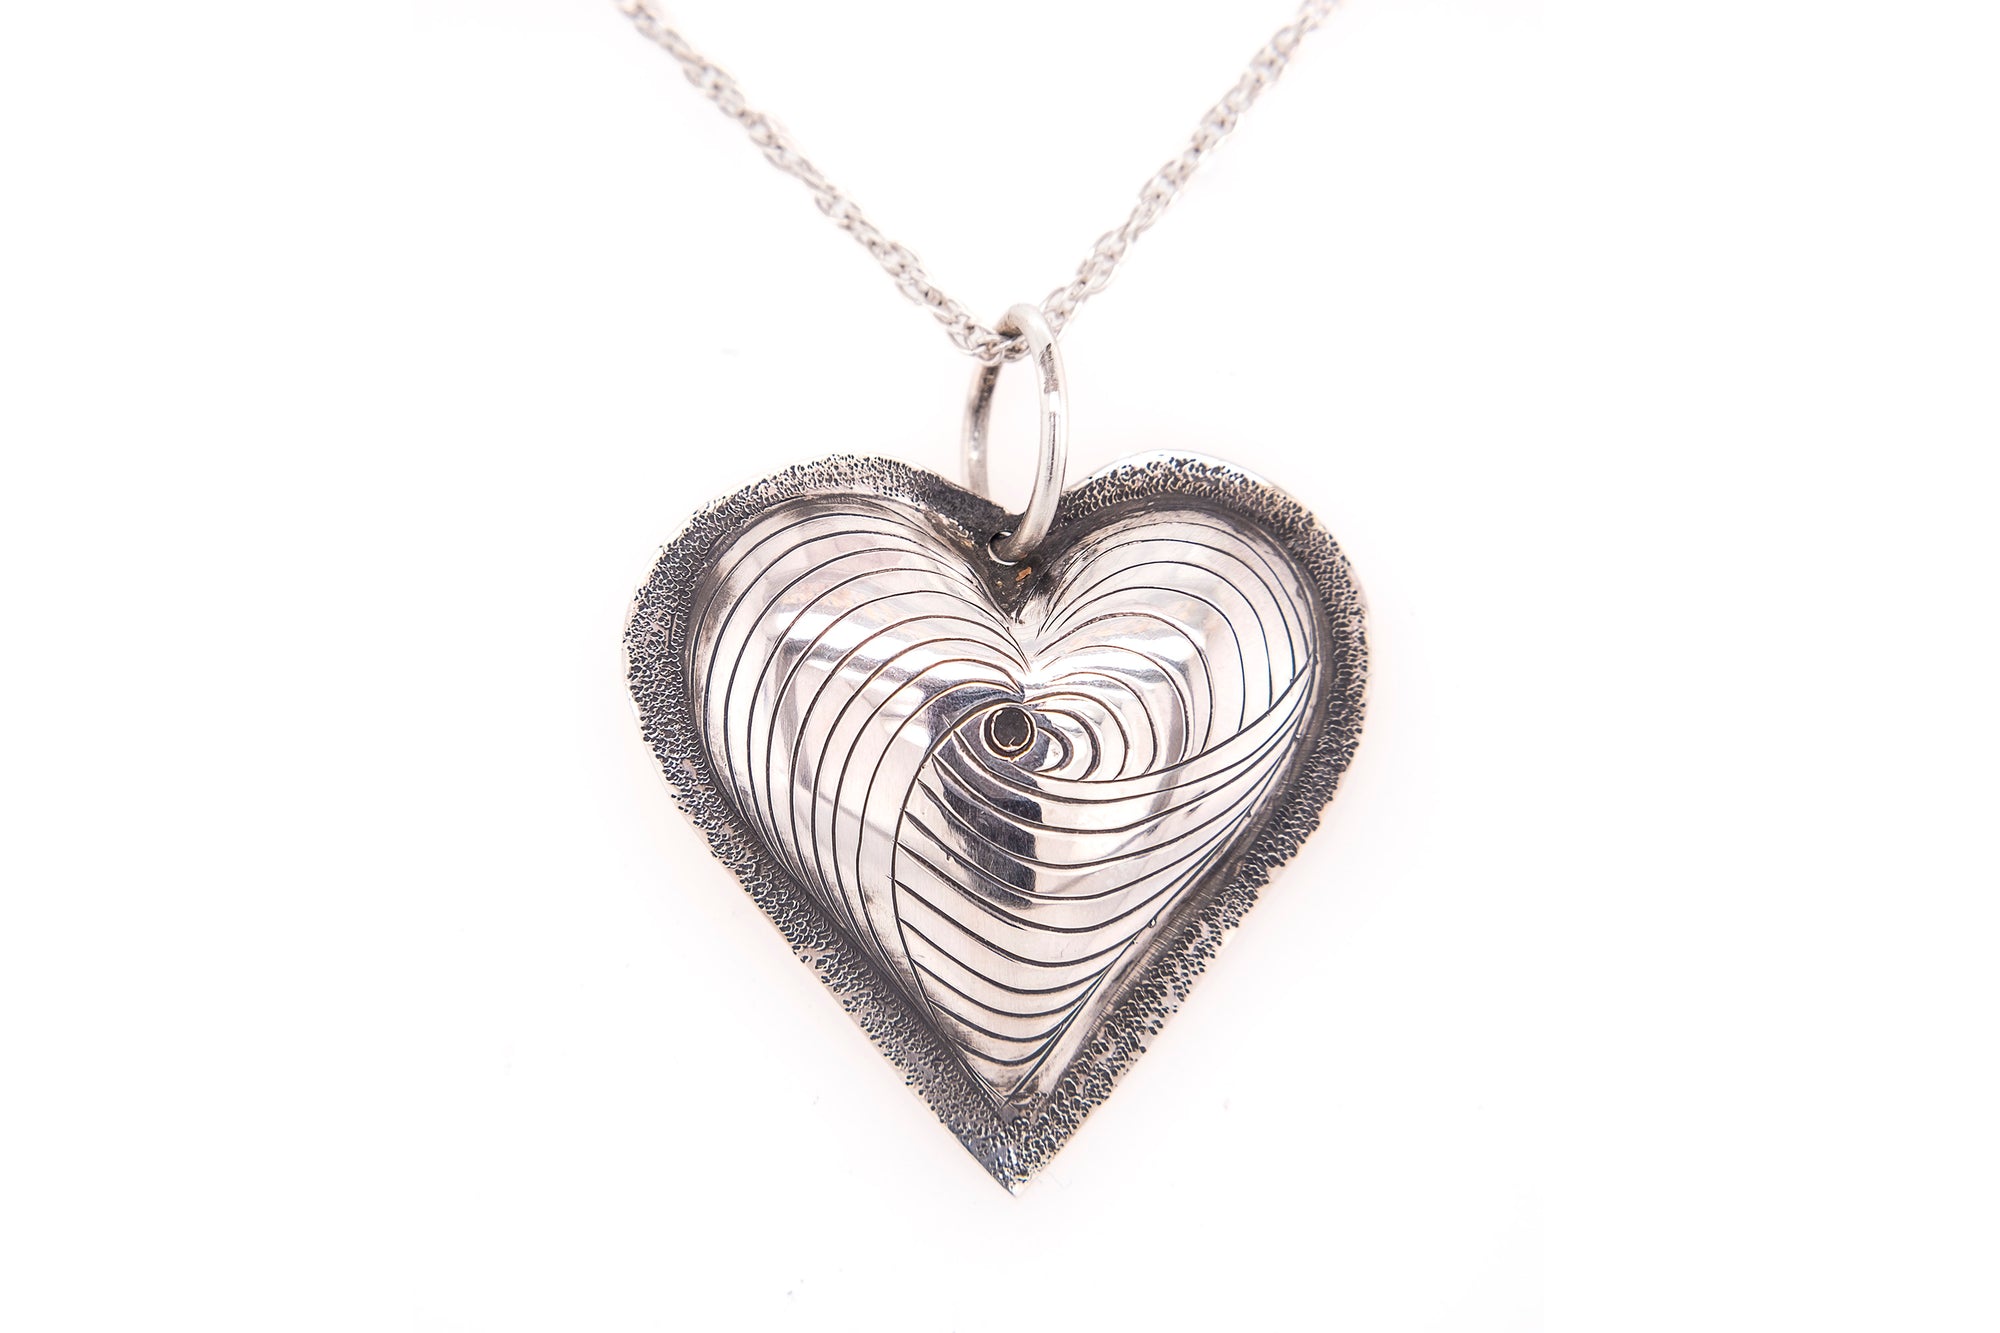 Engraved Spiral Heart Pendant